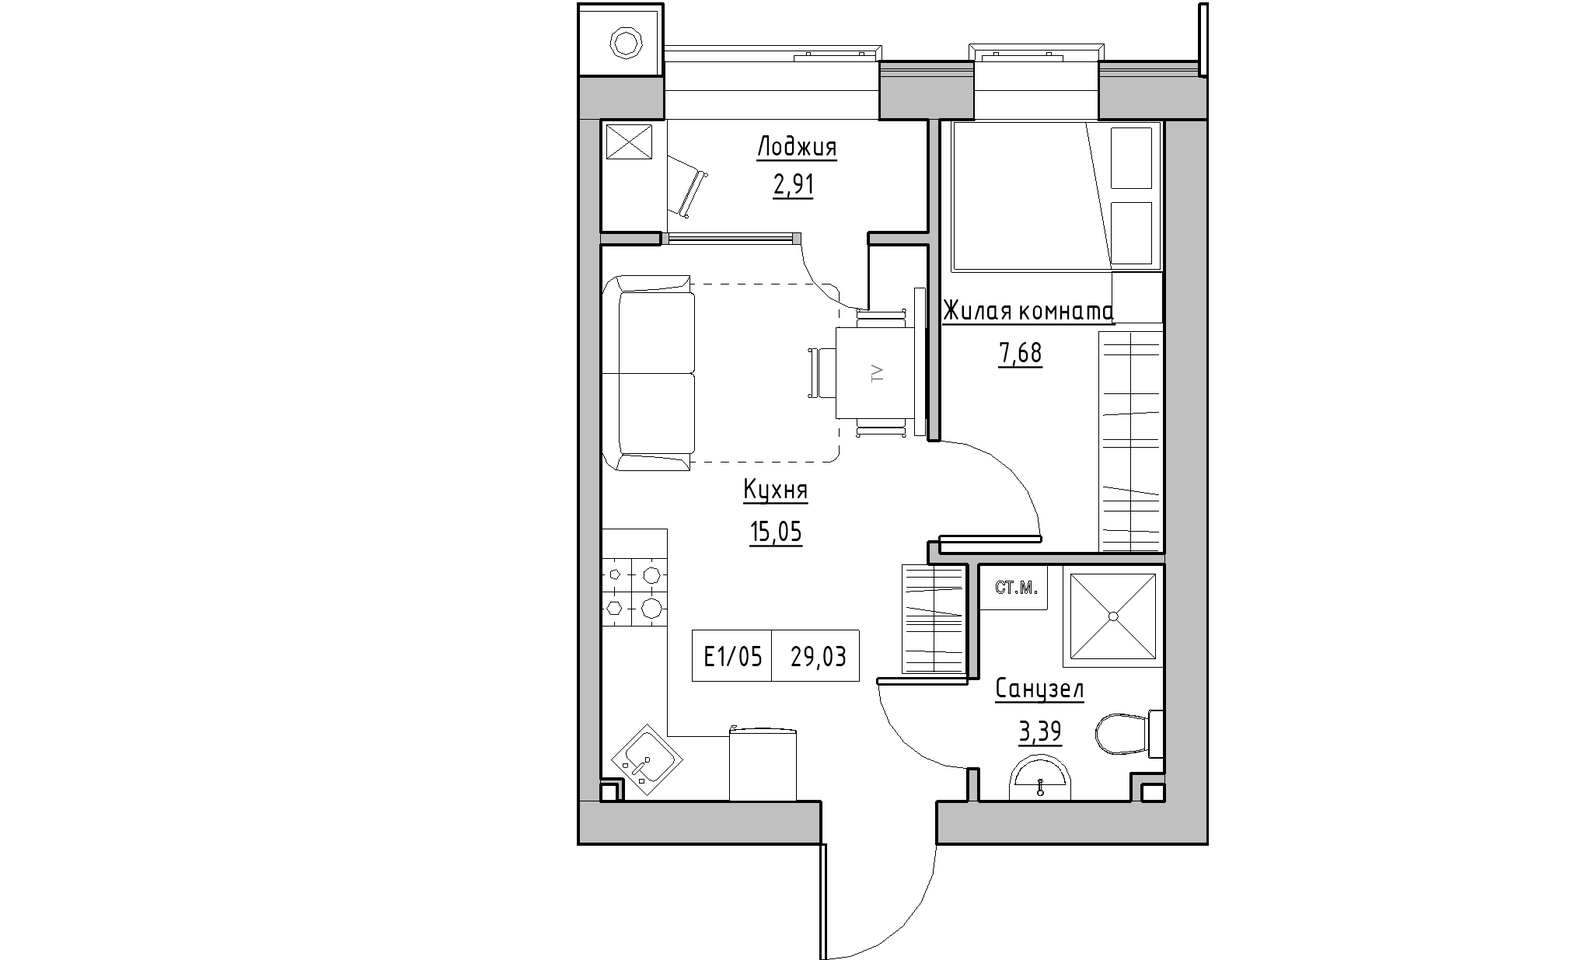 Planning 1-rm flats area 29.03m2, KS-014-03/0007.